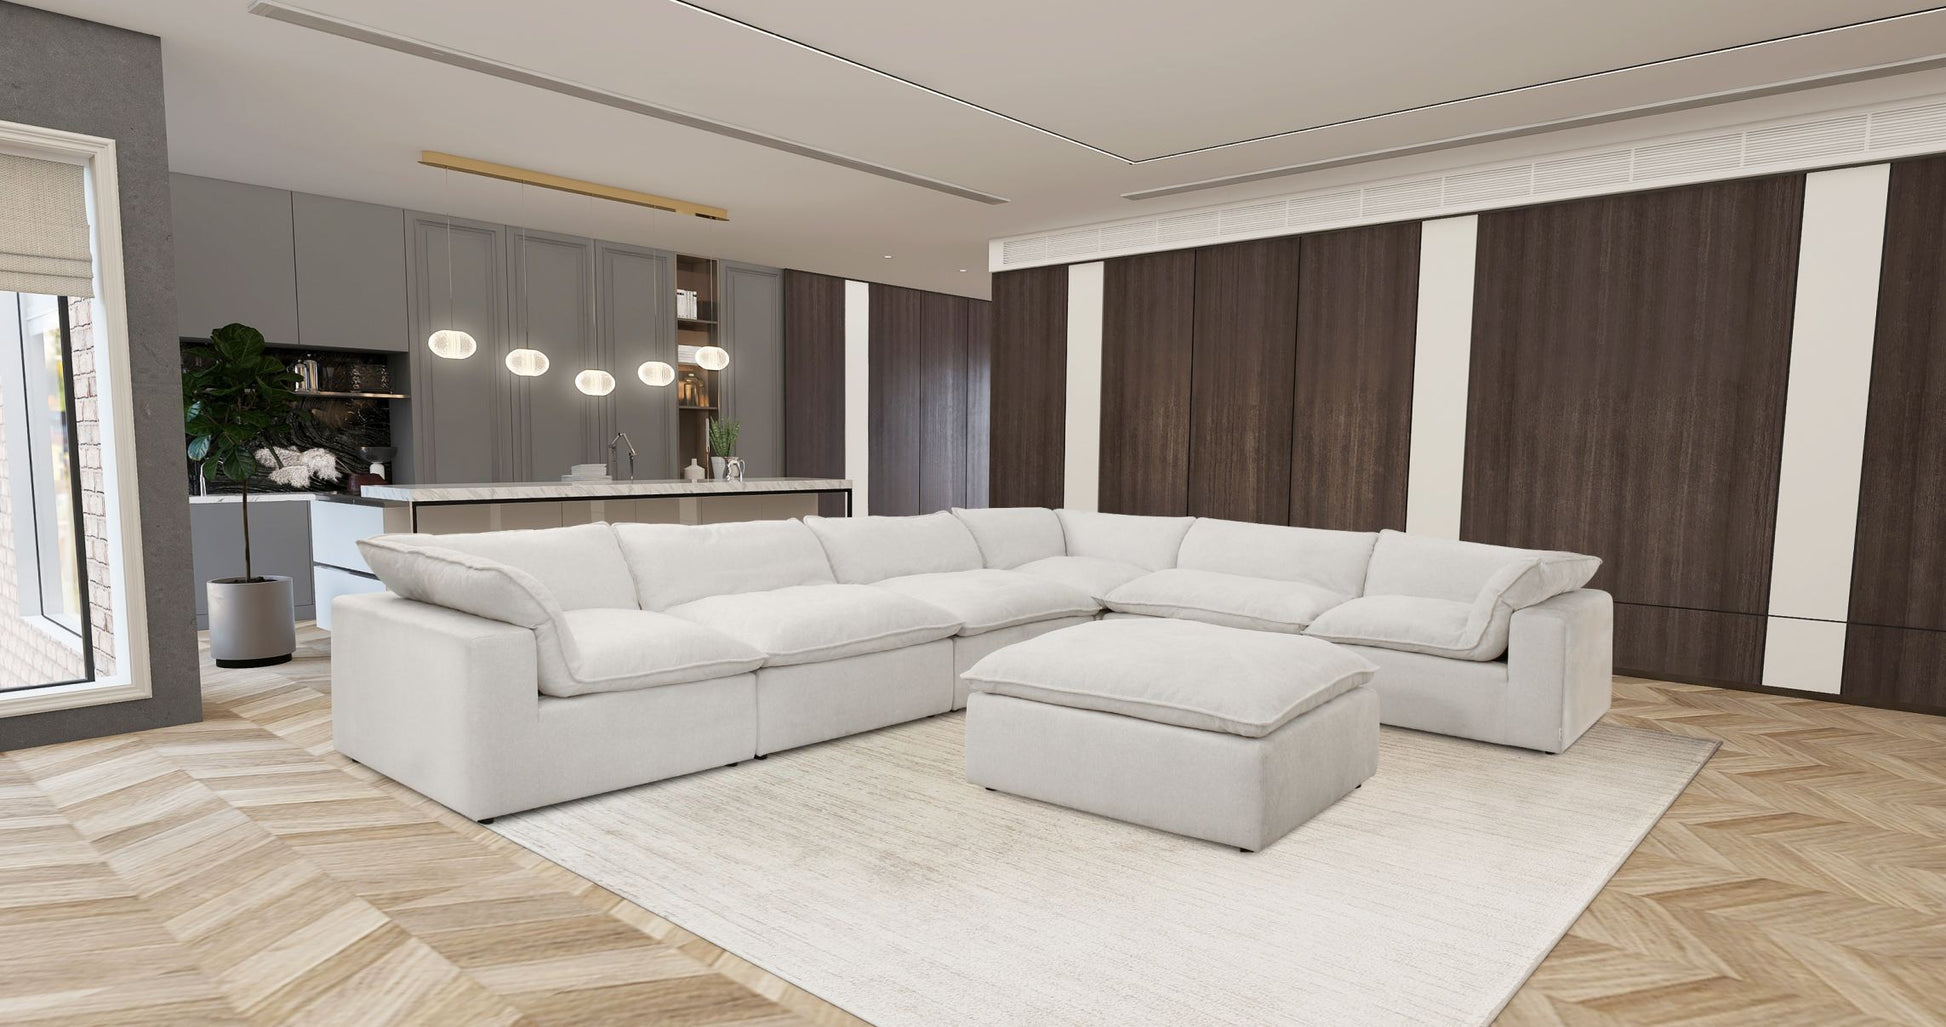 VIG Furniture Divani Casa Kellogg White Feather Sectional Sofa